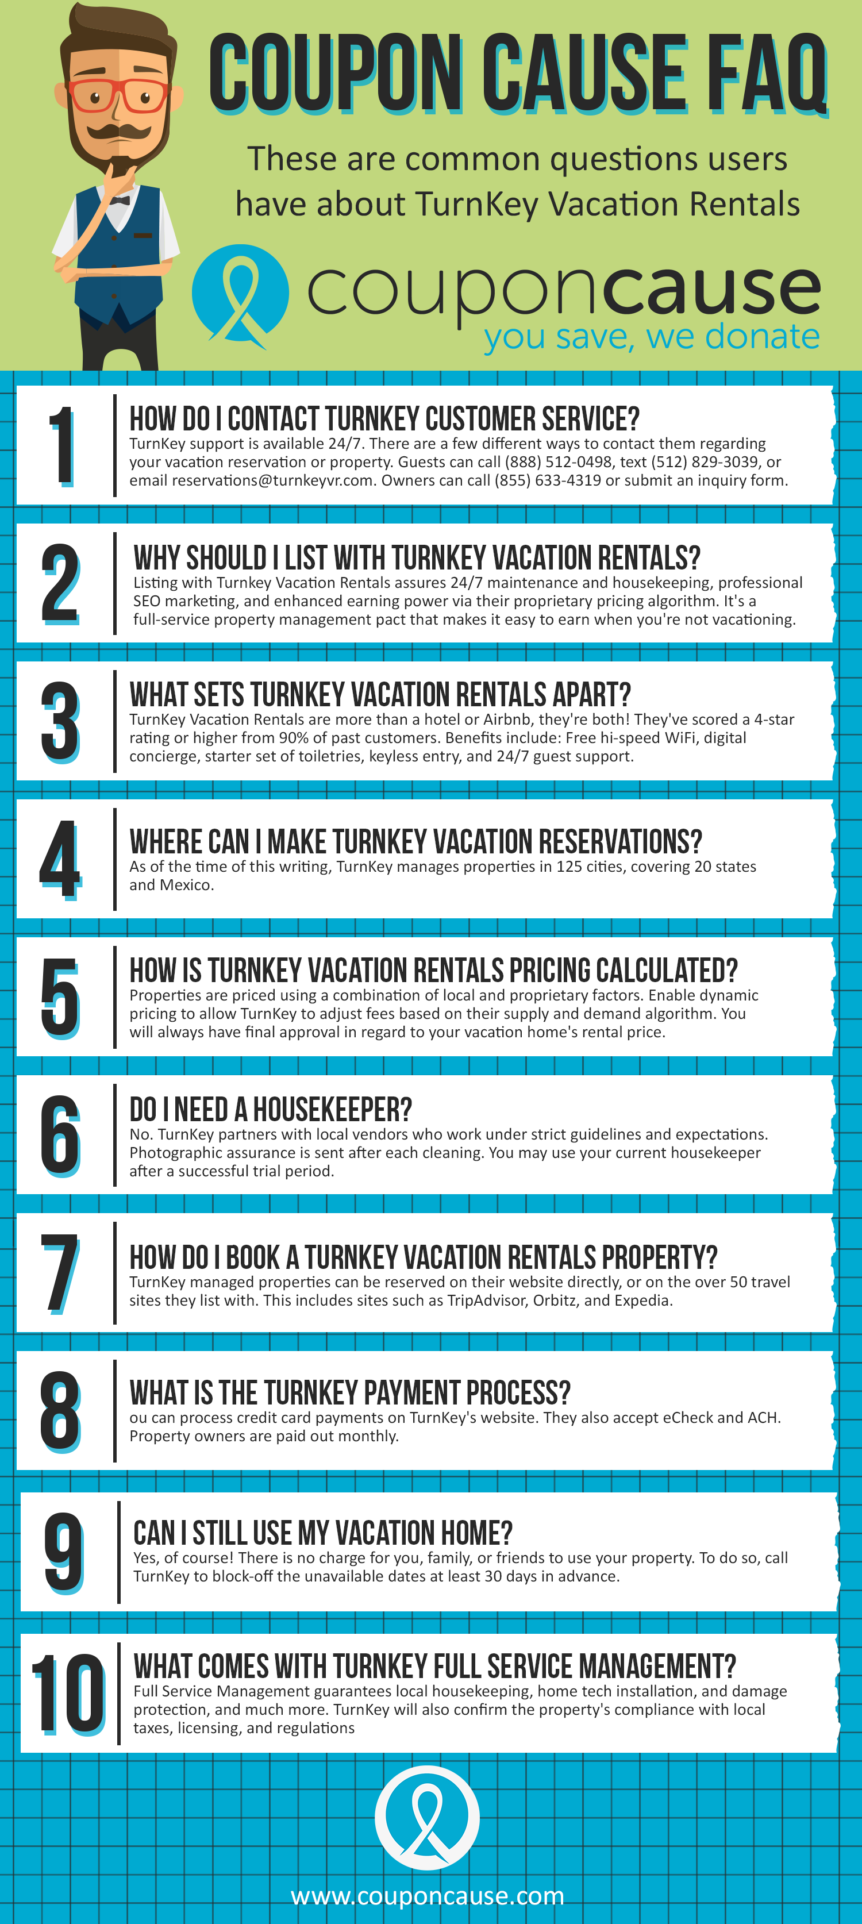 Turnkey Vacation Rentals Coupon Cause FAQ (C.C. FAQ)